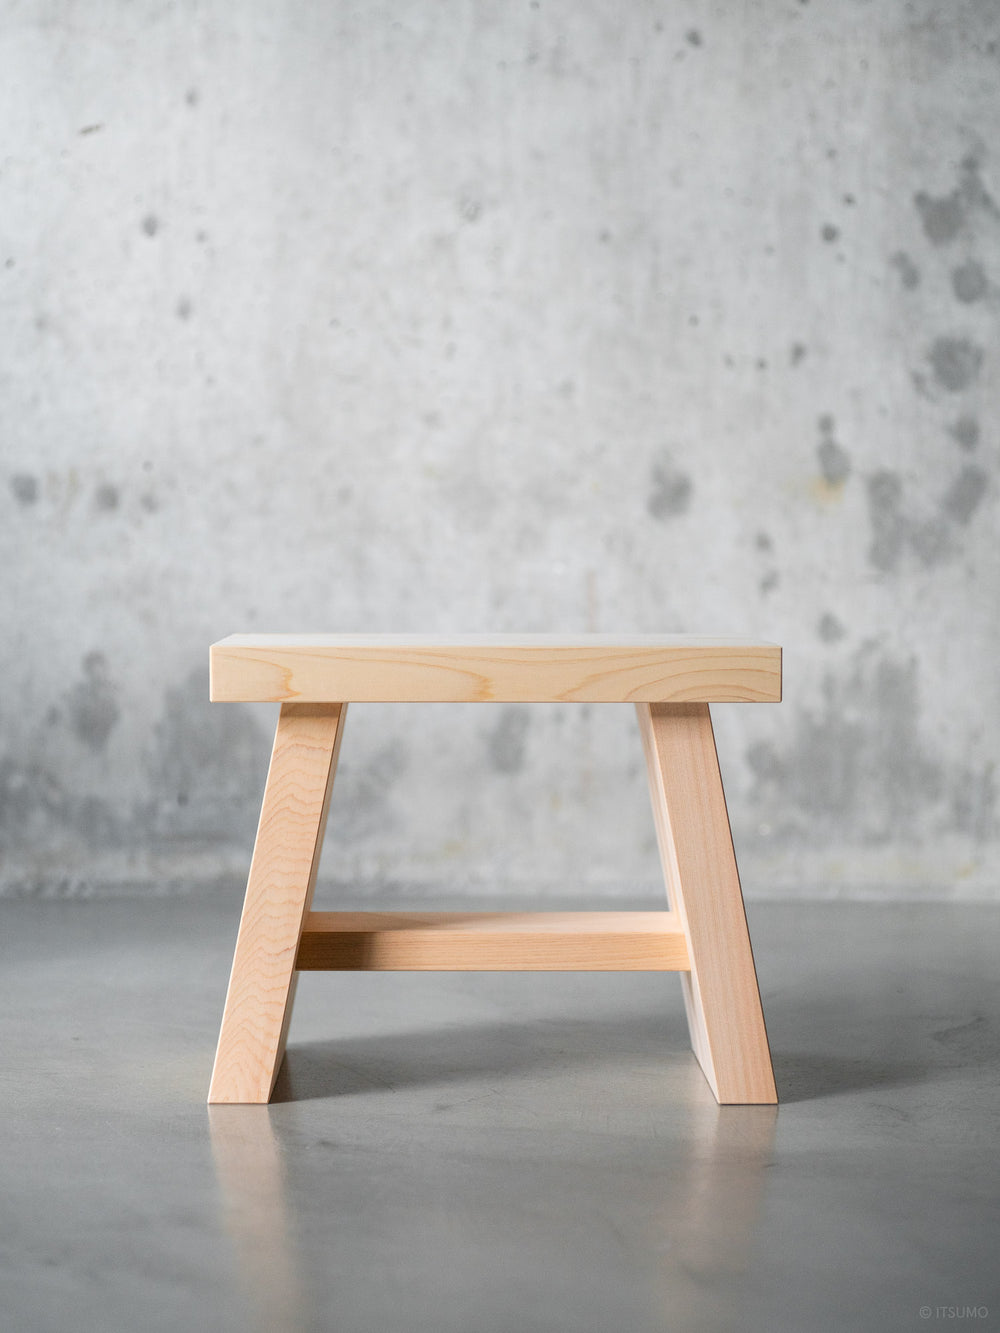 Hinoki bath stool handcrafted in Japan using sustainable Japanese cypress wood